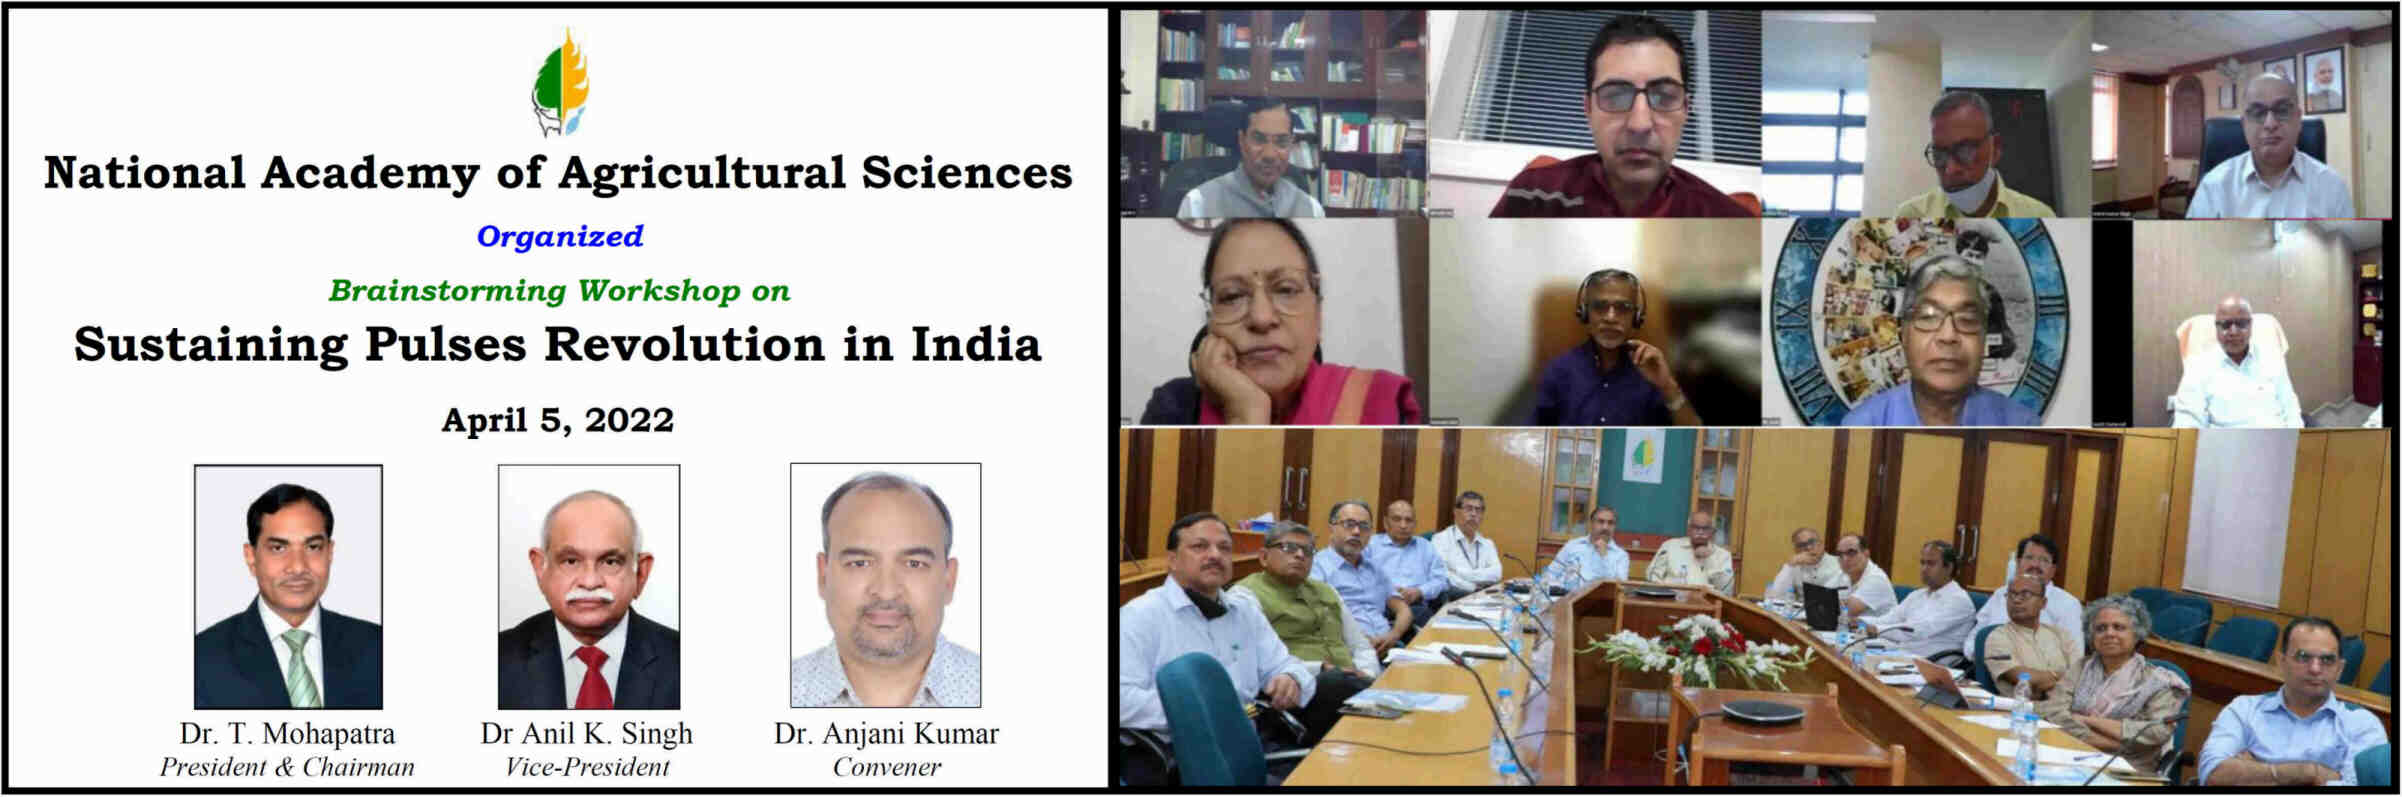 Brainstorming Workshop on Sustaining Pulses Revolution in India